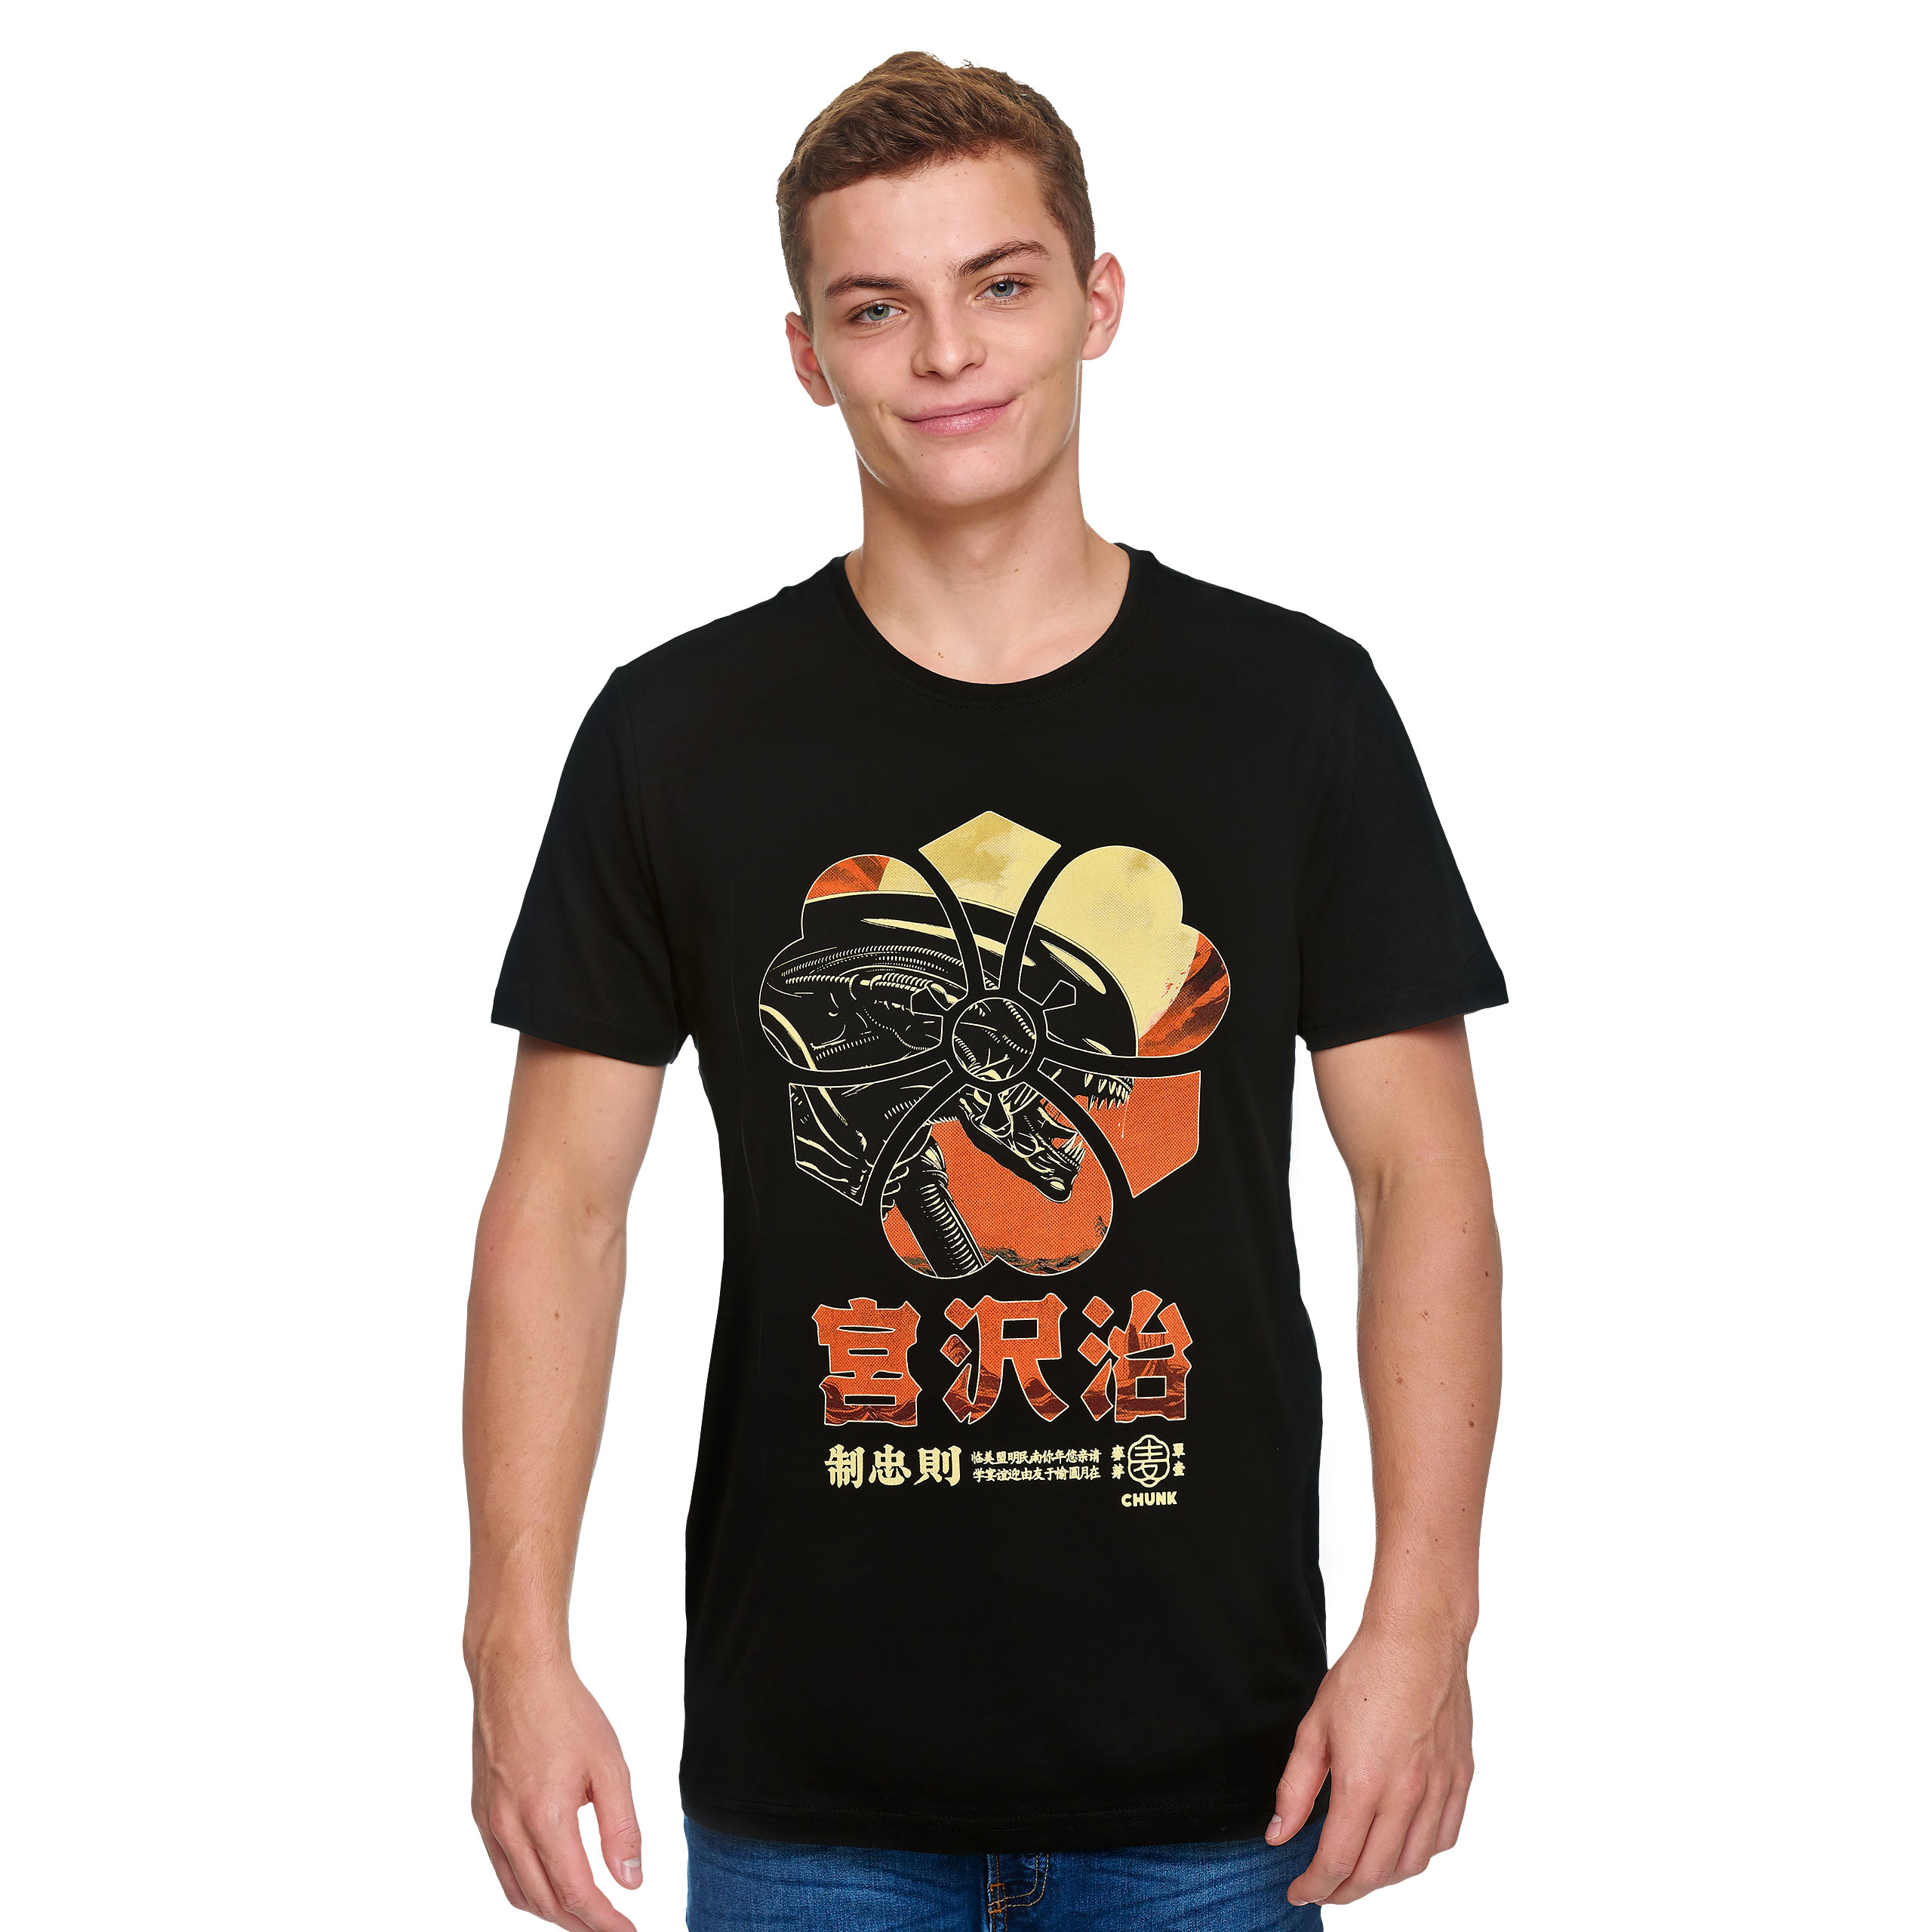 Space Hunter T-Shirt for Alien Fans black